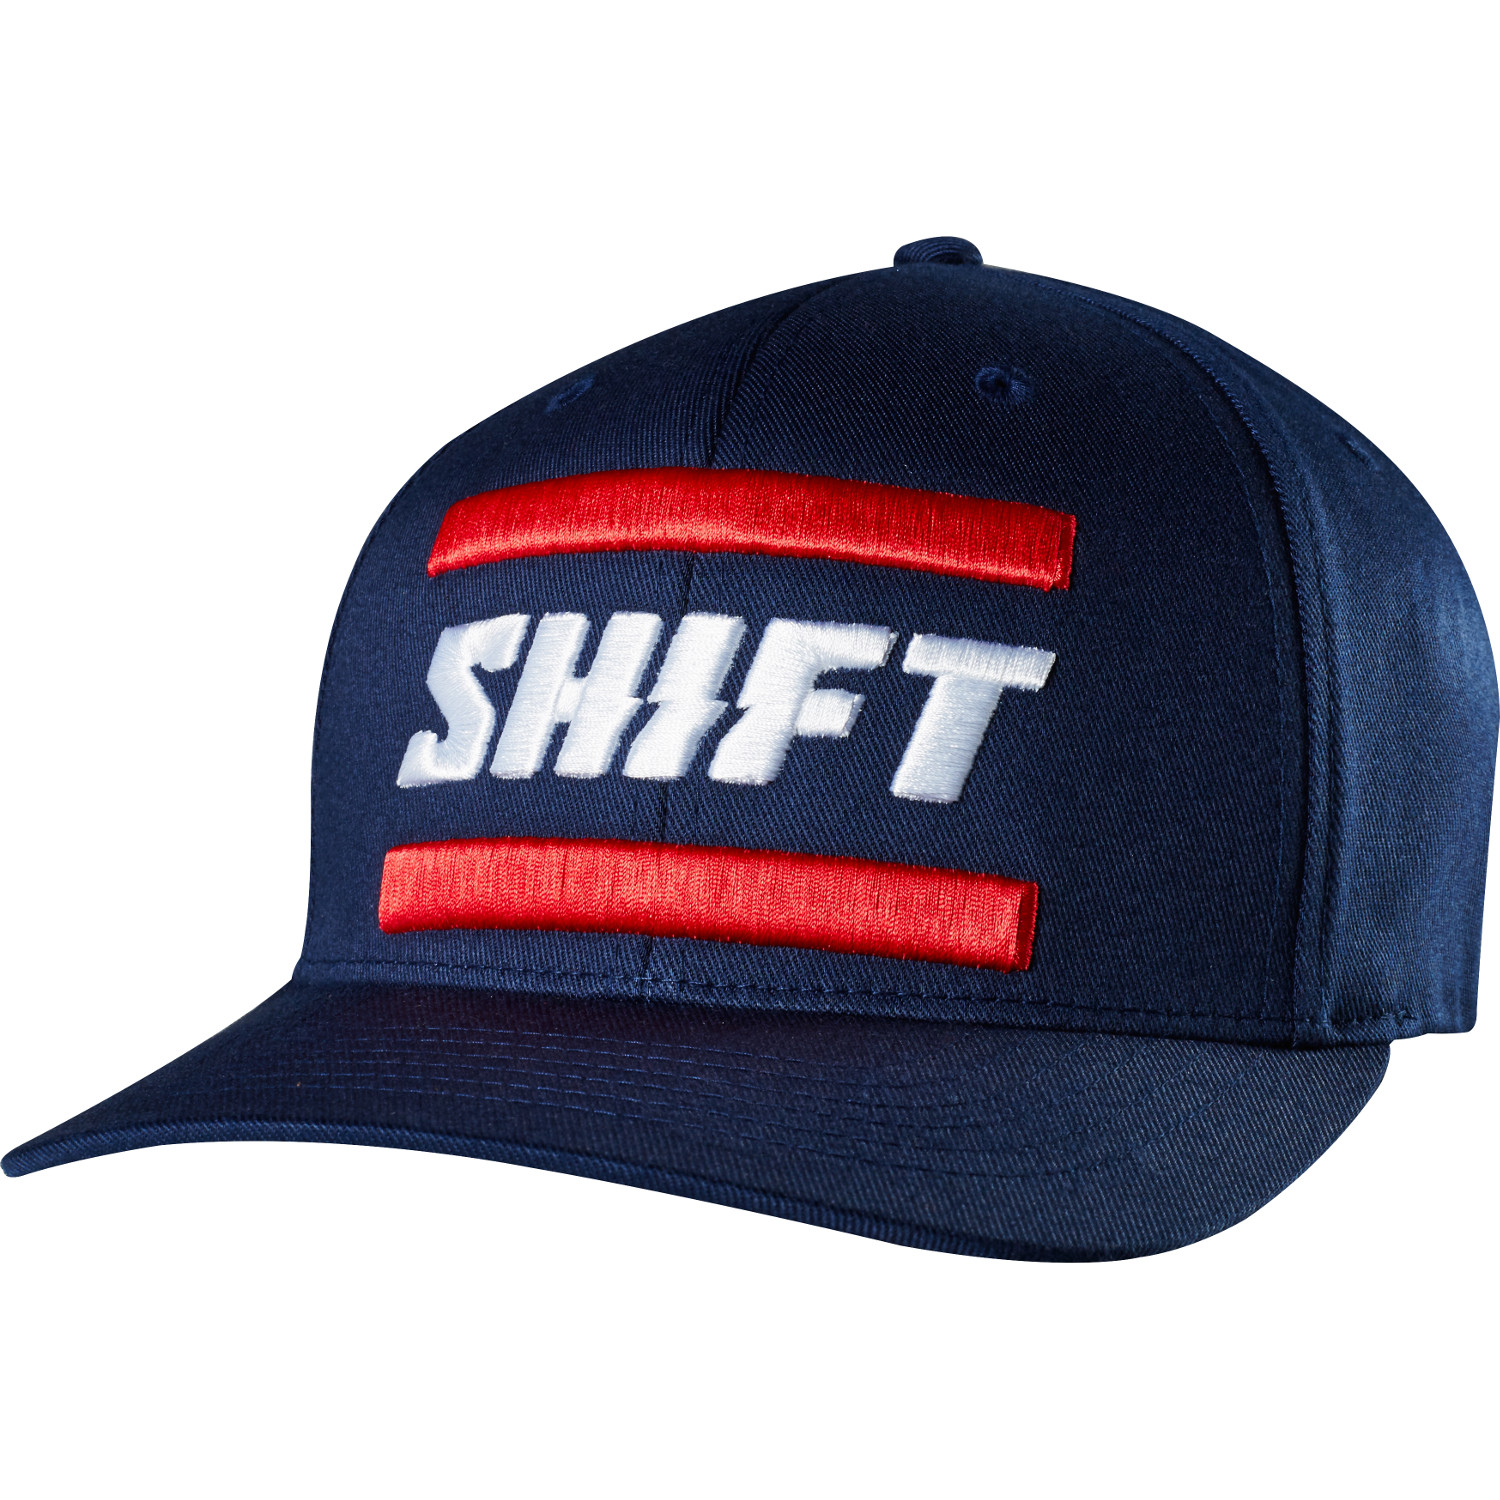 Shift Cappellino Flexfit 3lack Label Navy